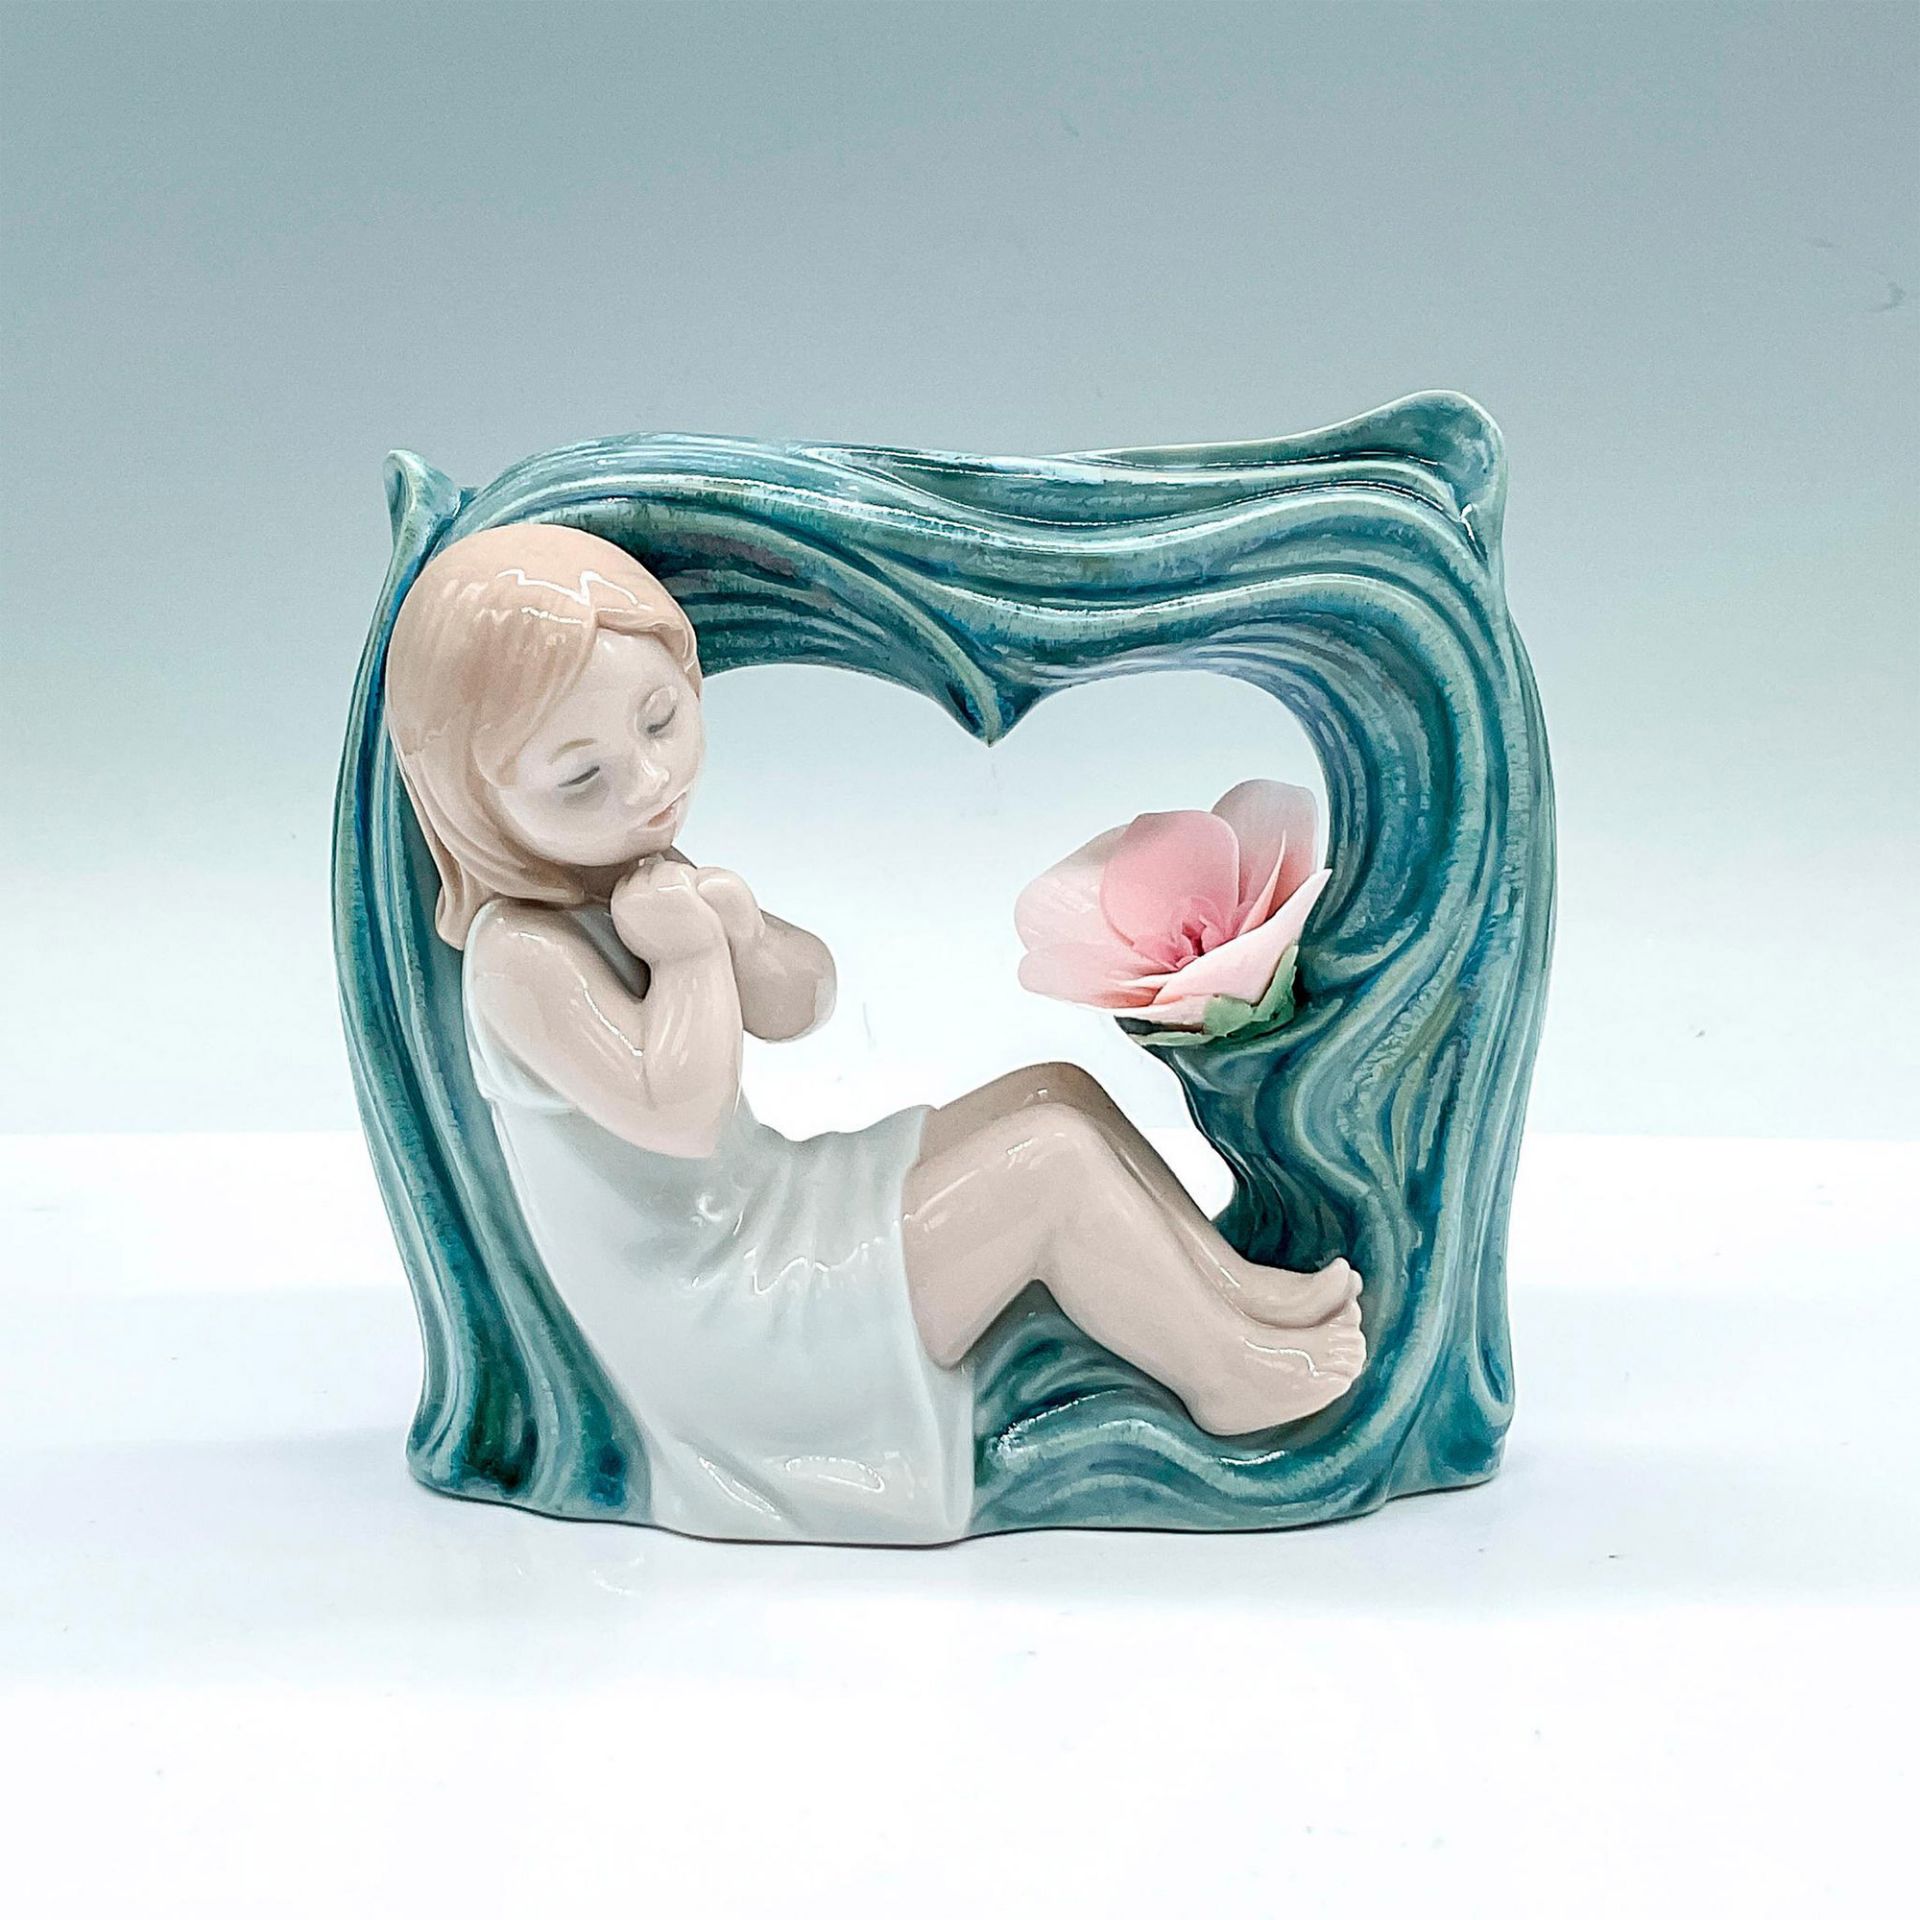 Childhood Fantasy 1008130 - Lladro Porcelain Figurine